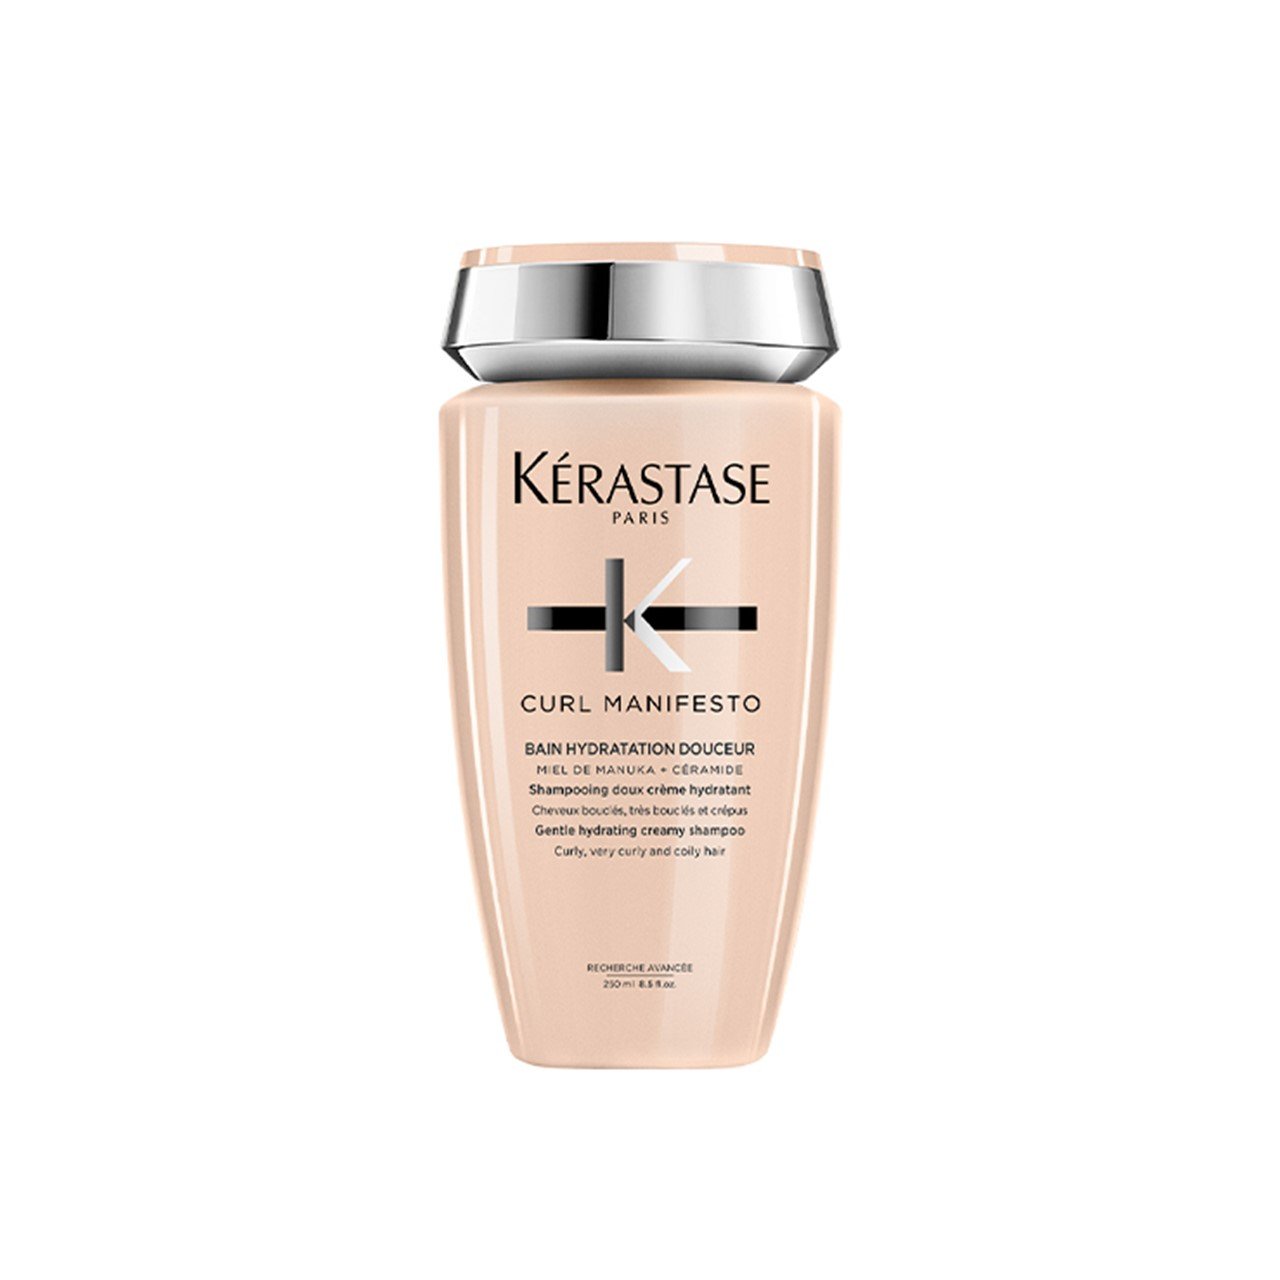 Kérastase Curl Manifesto Bain Hydration Douceur Shampoo 250ml (8.45fl oz)